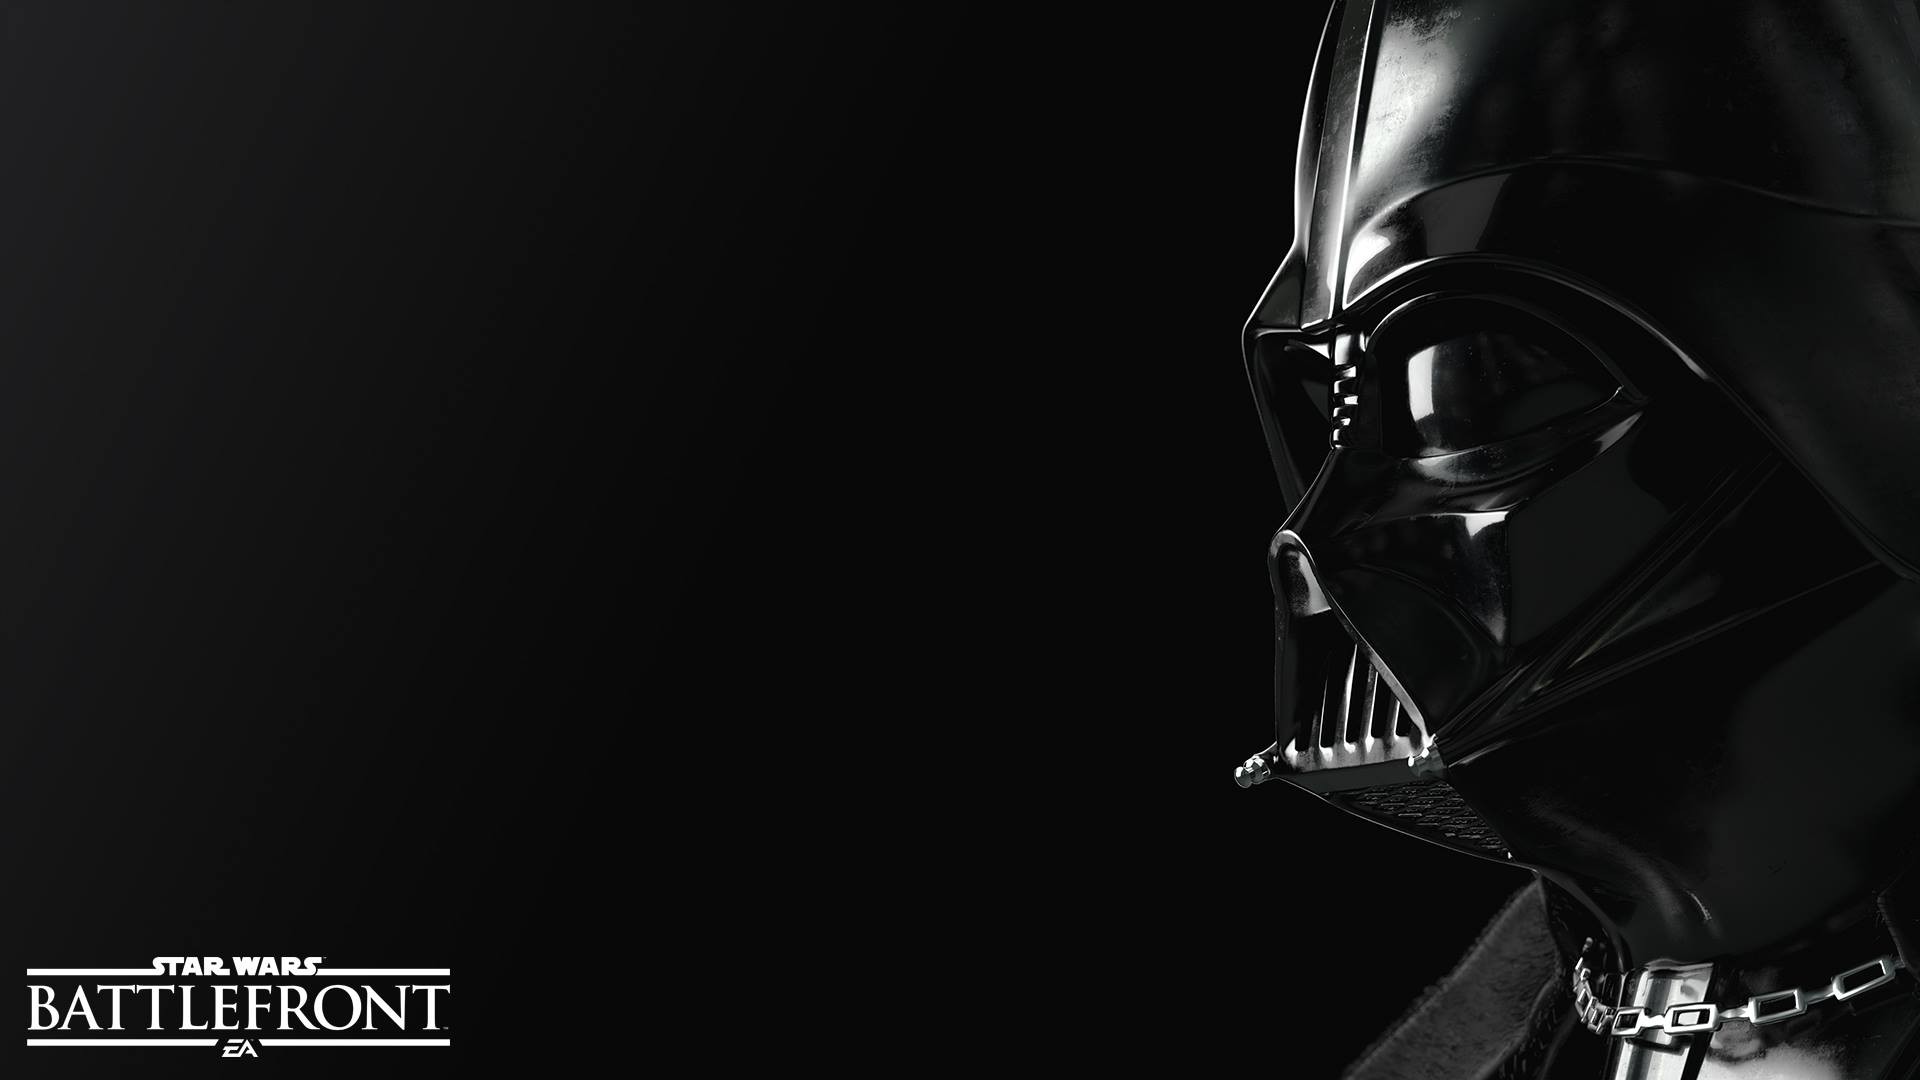 General 1920x1080 Star Wars: Battlefront Star Wars Darth Vader Sith Galactic Empire dark black simple background video games Star Wars Villains PC gaming Electronic Arts EA DICE